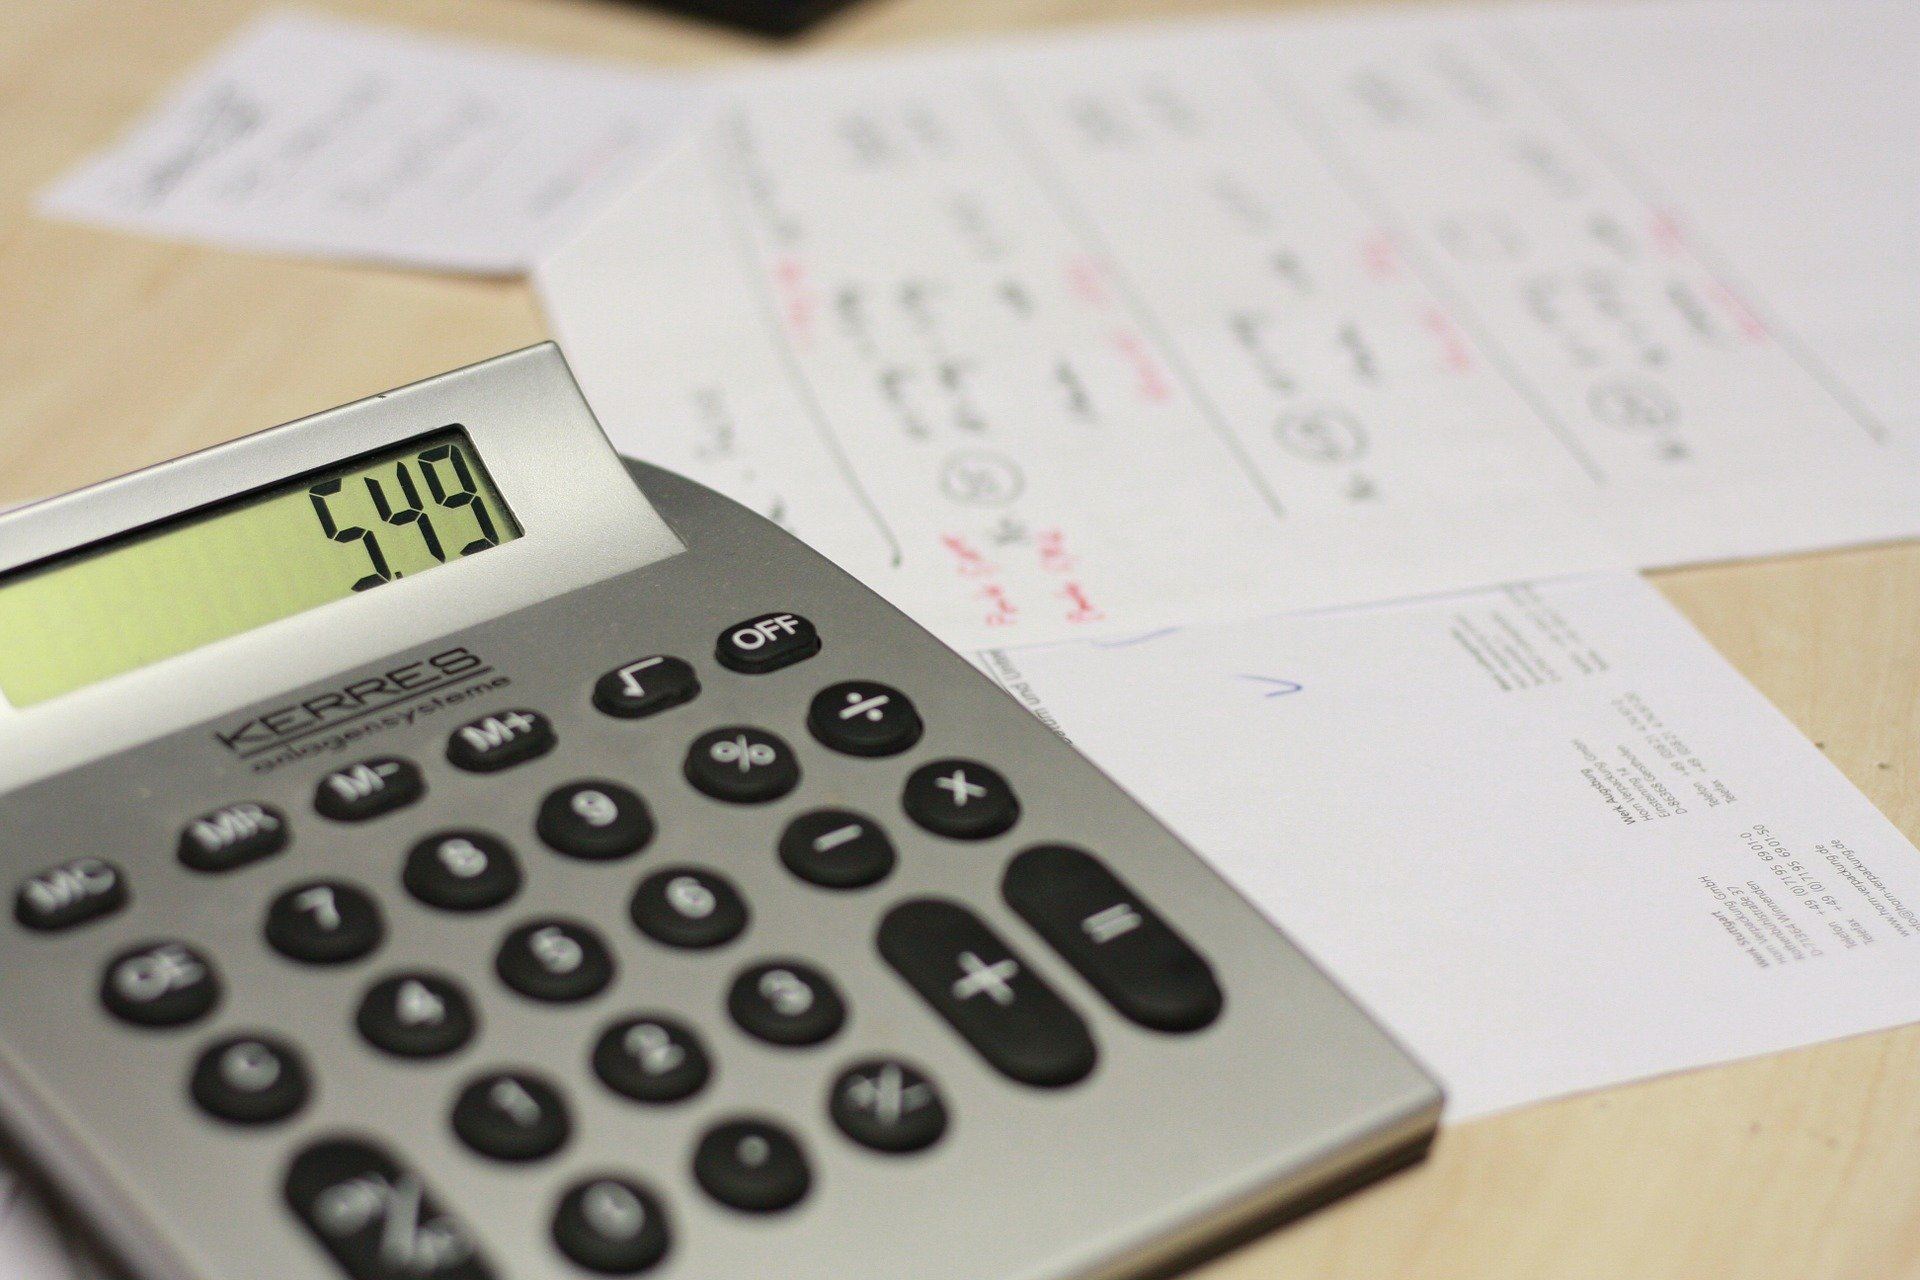 Calculator and Bills